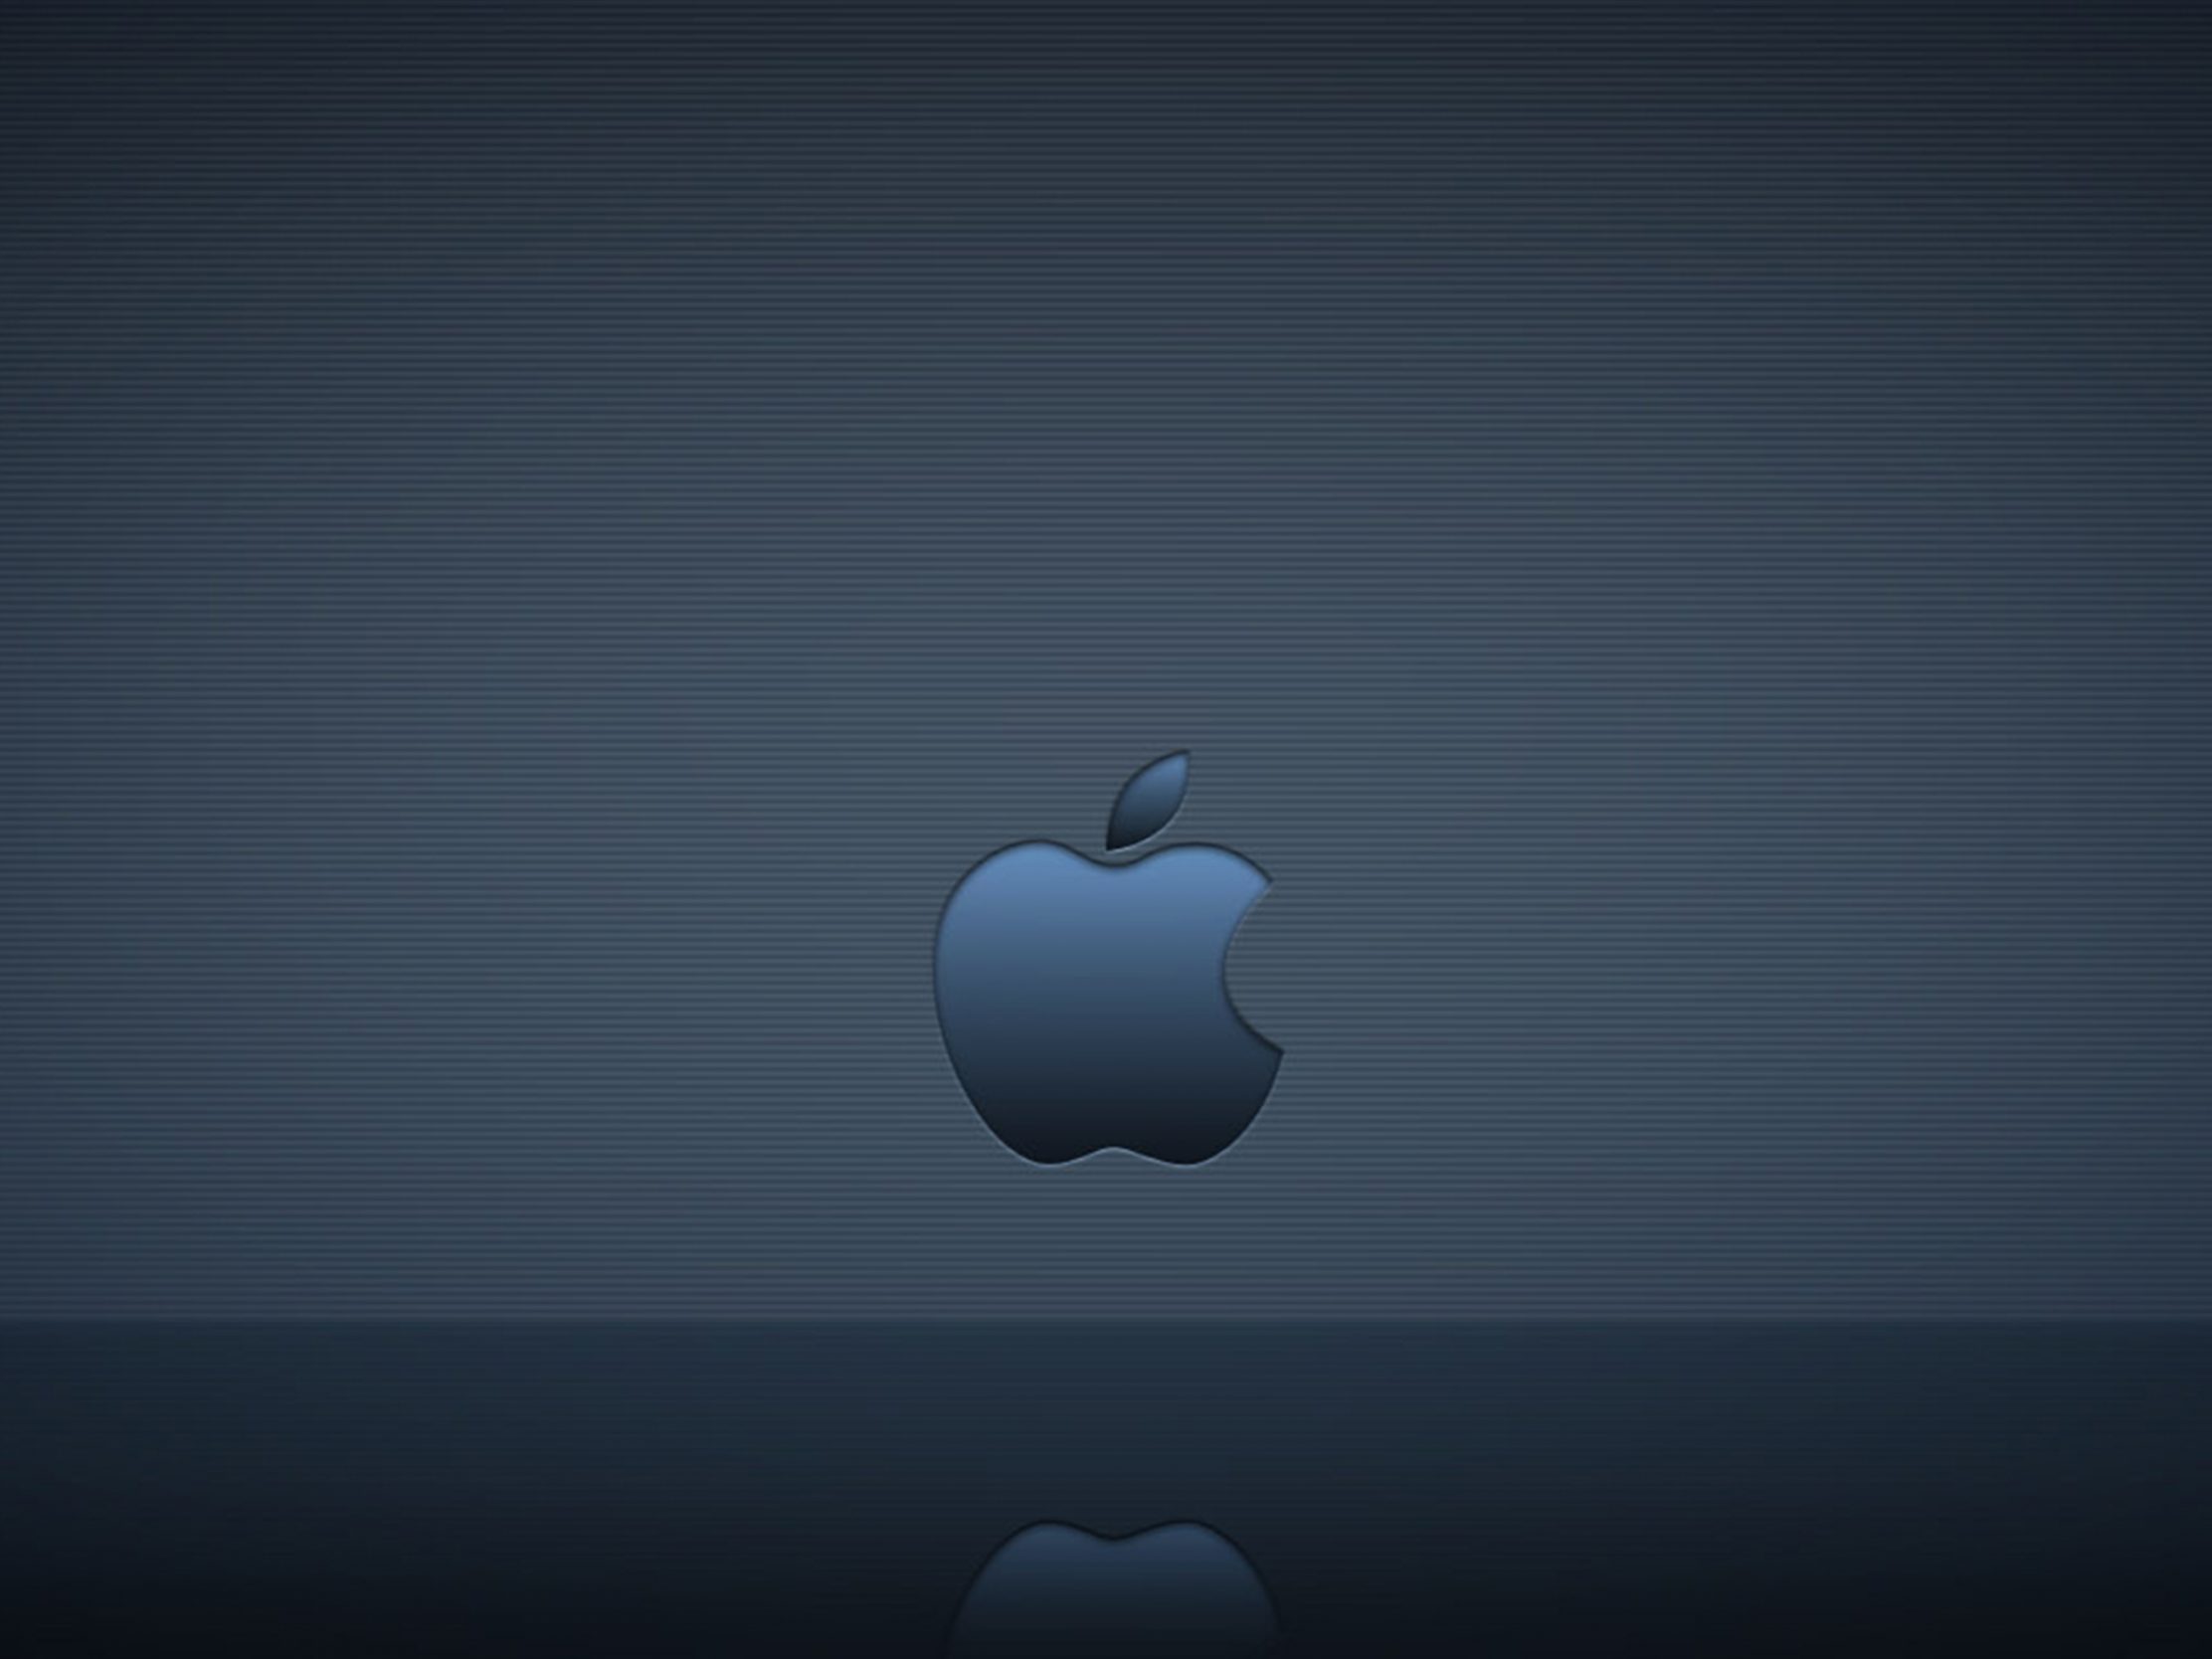 2224x1668 iPad Pro wallpapers Apple Logo Reflection Ipad Wallpaper 2224x1668 pixels resolution